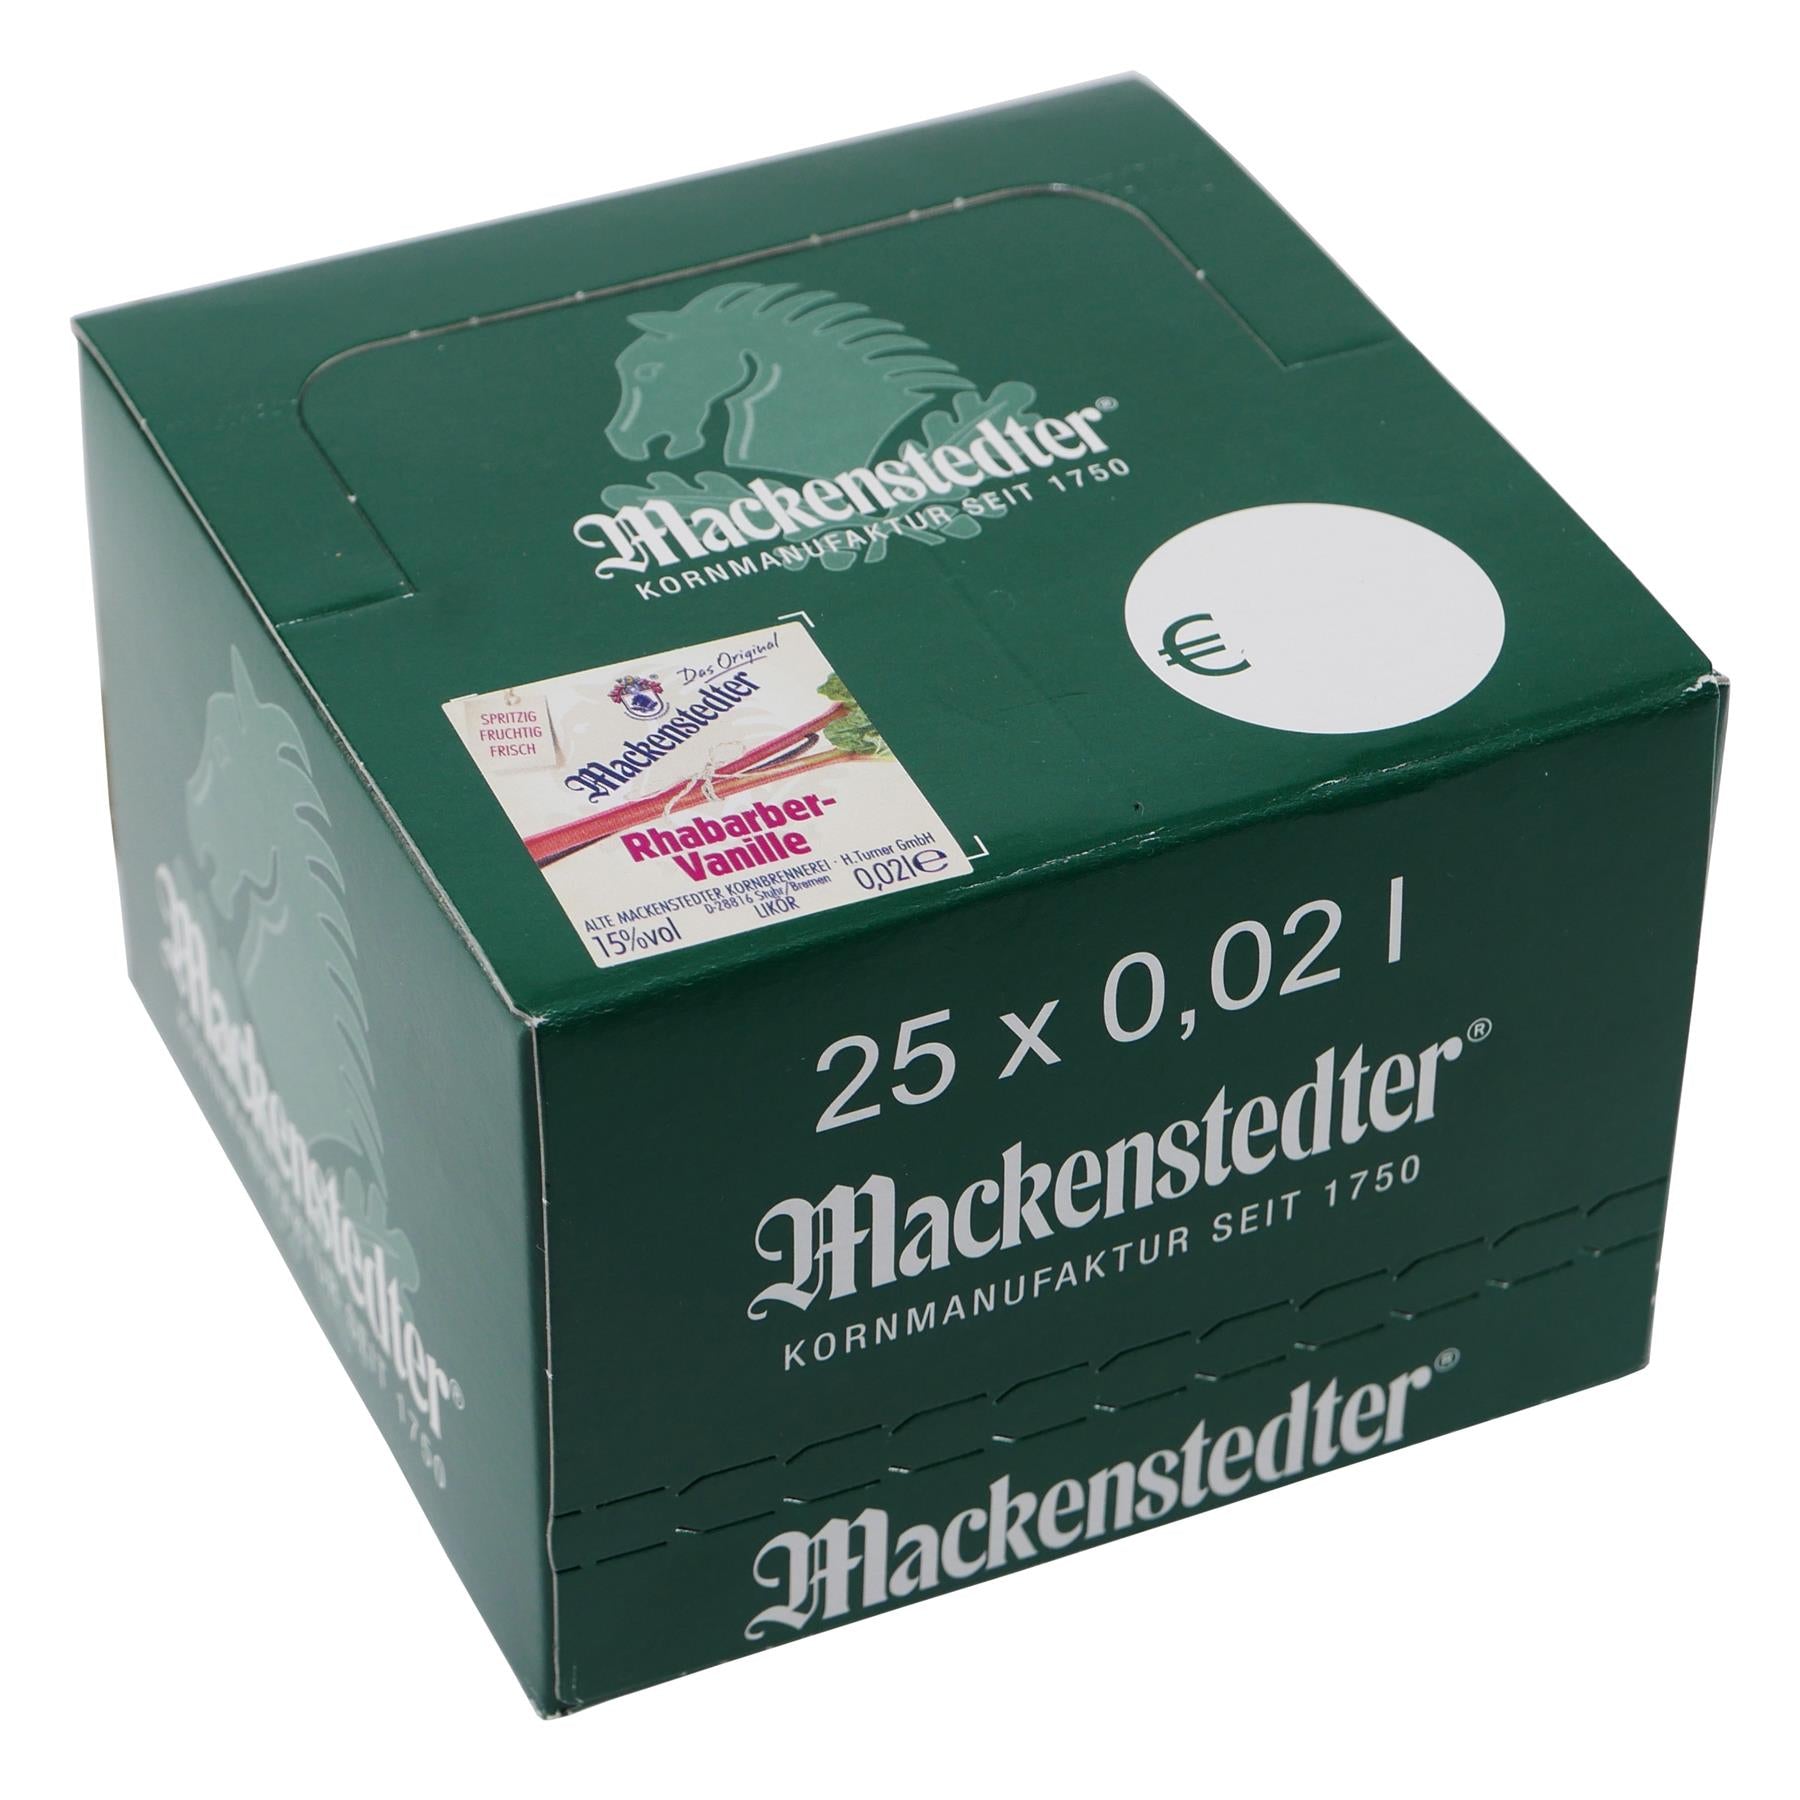 Mackenstedter Rhabarber-Vanille (25 x 0,02L)